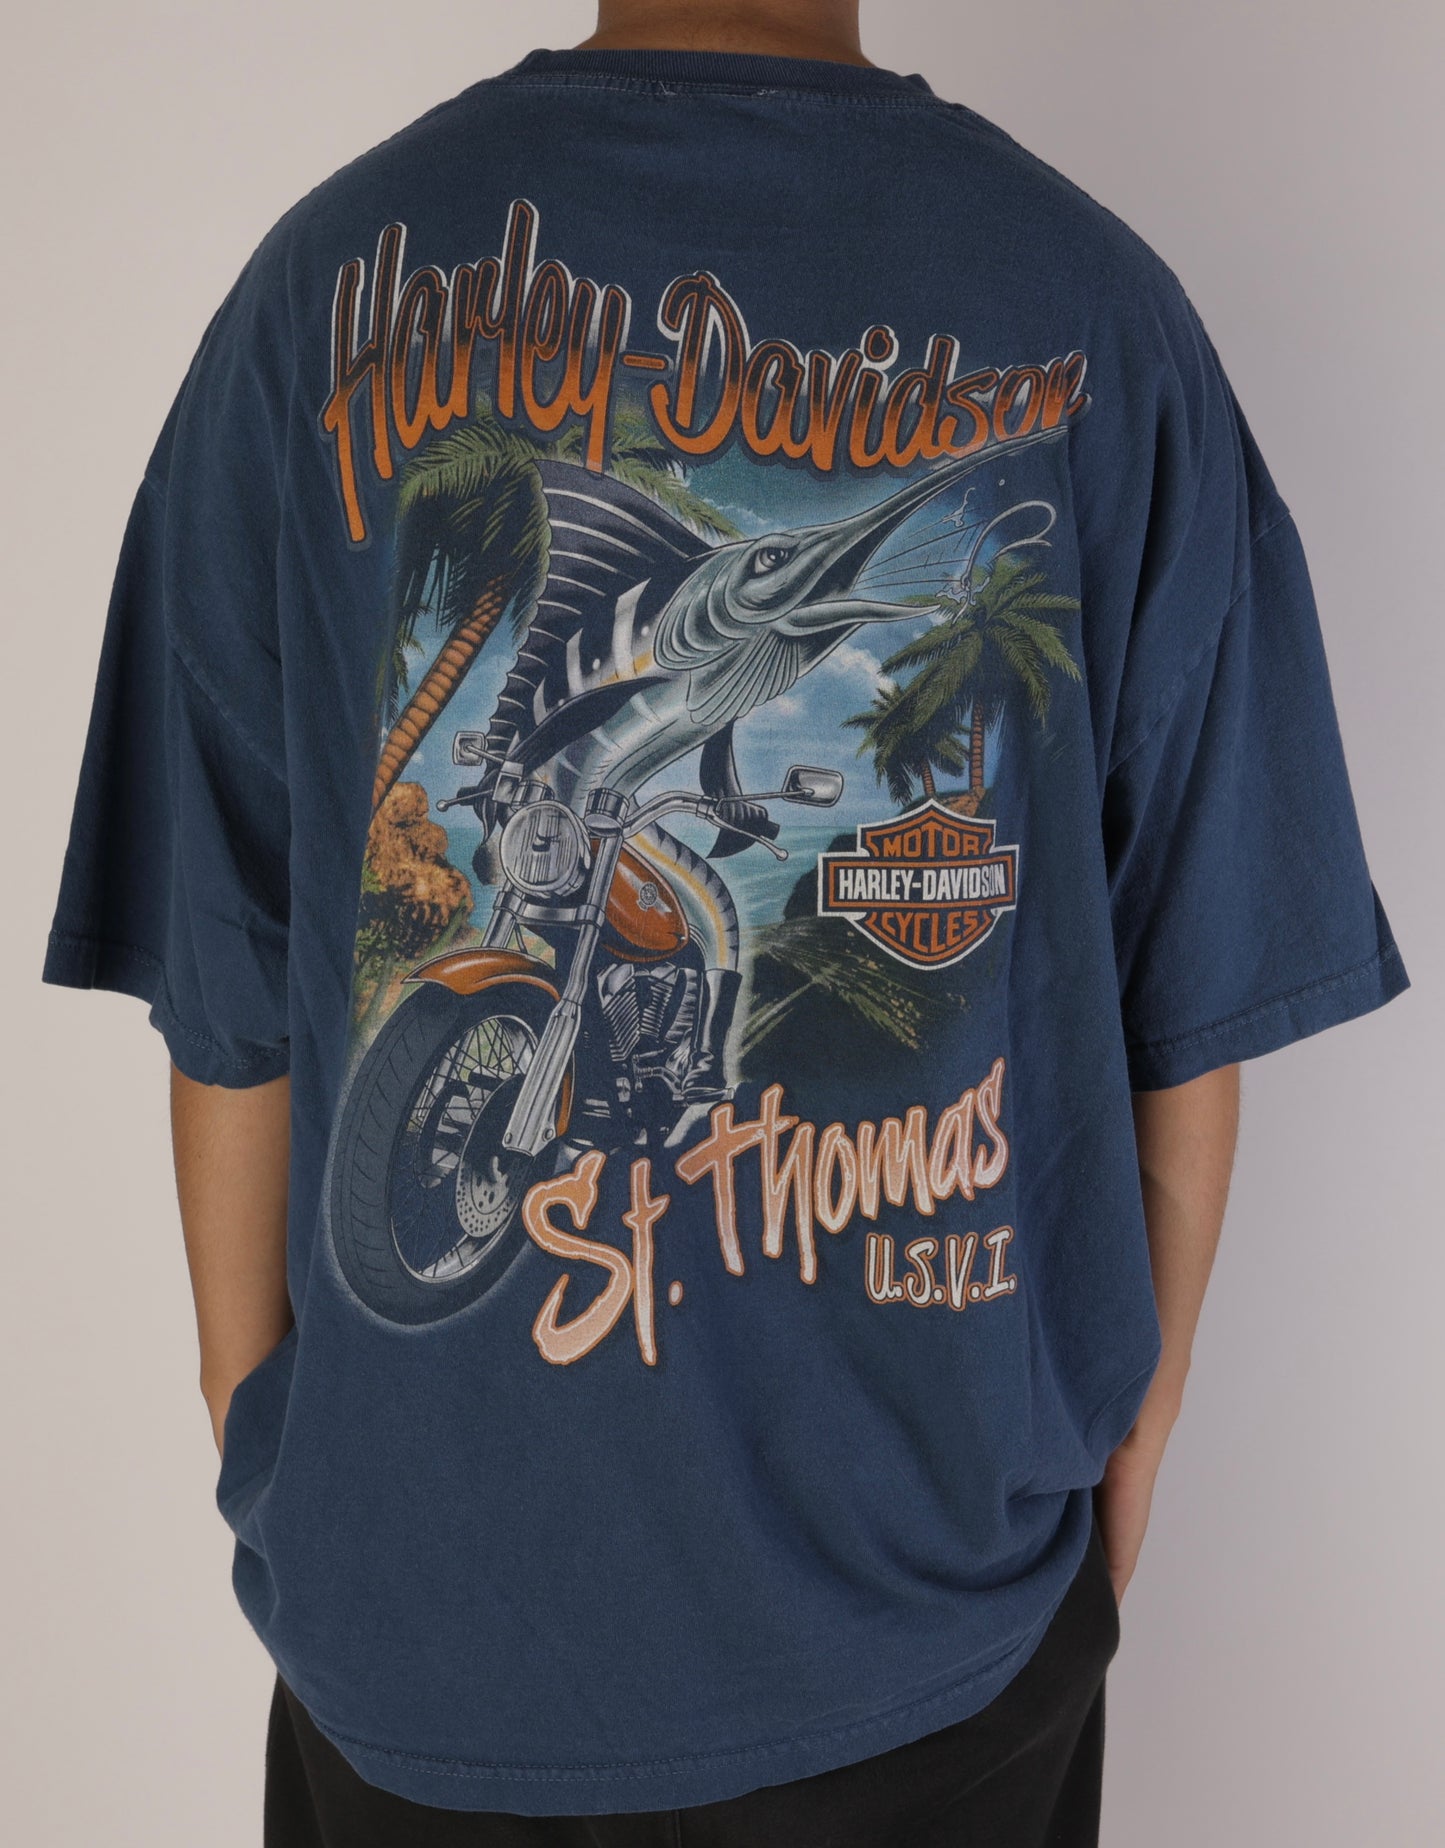 St. Thomas Harley Davidson Size 3XL